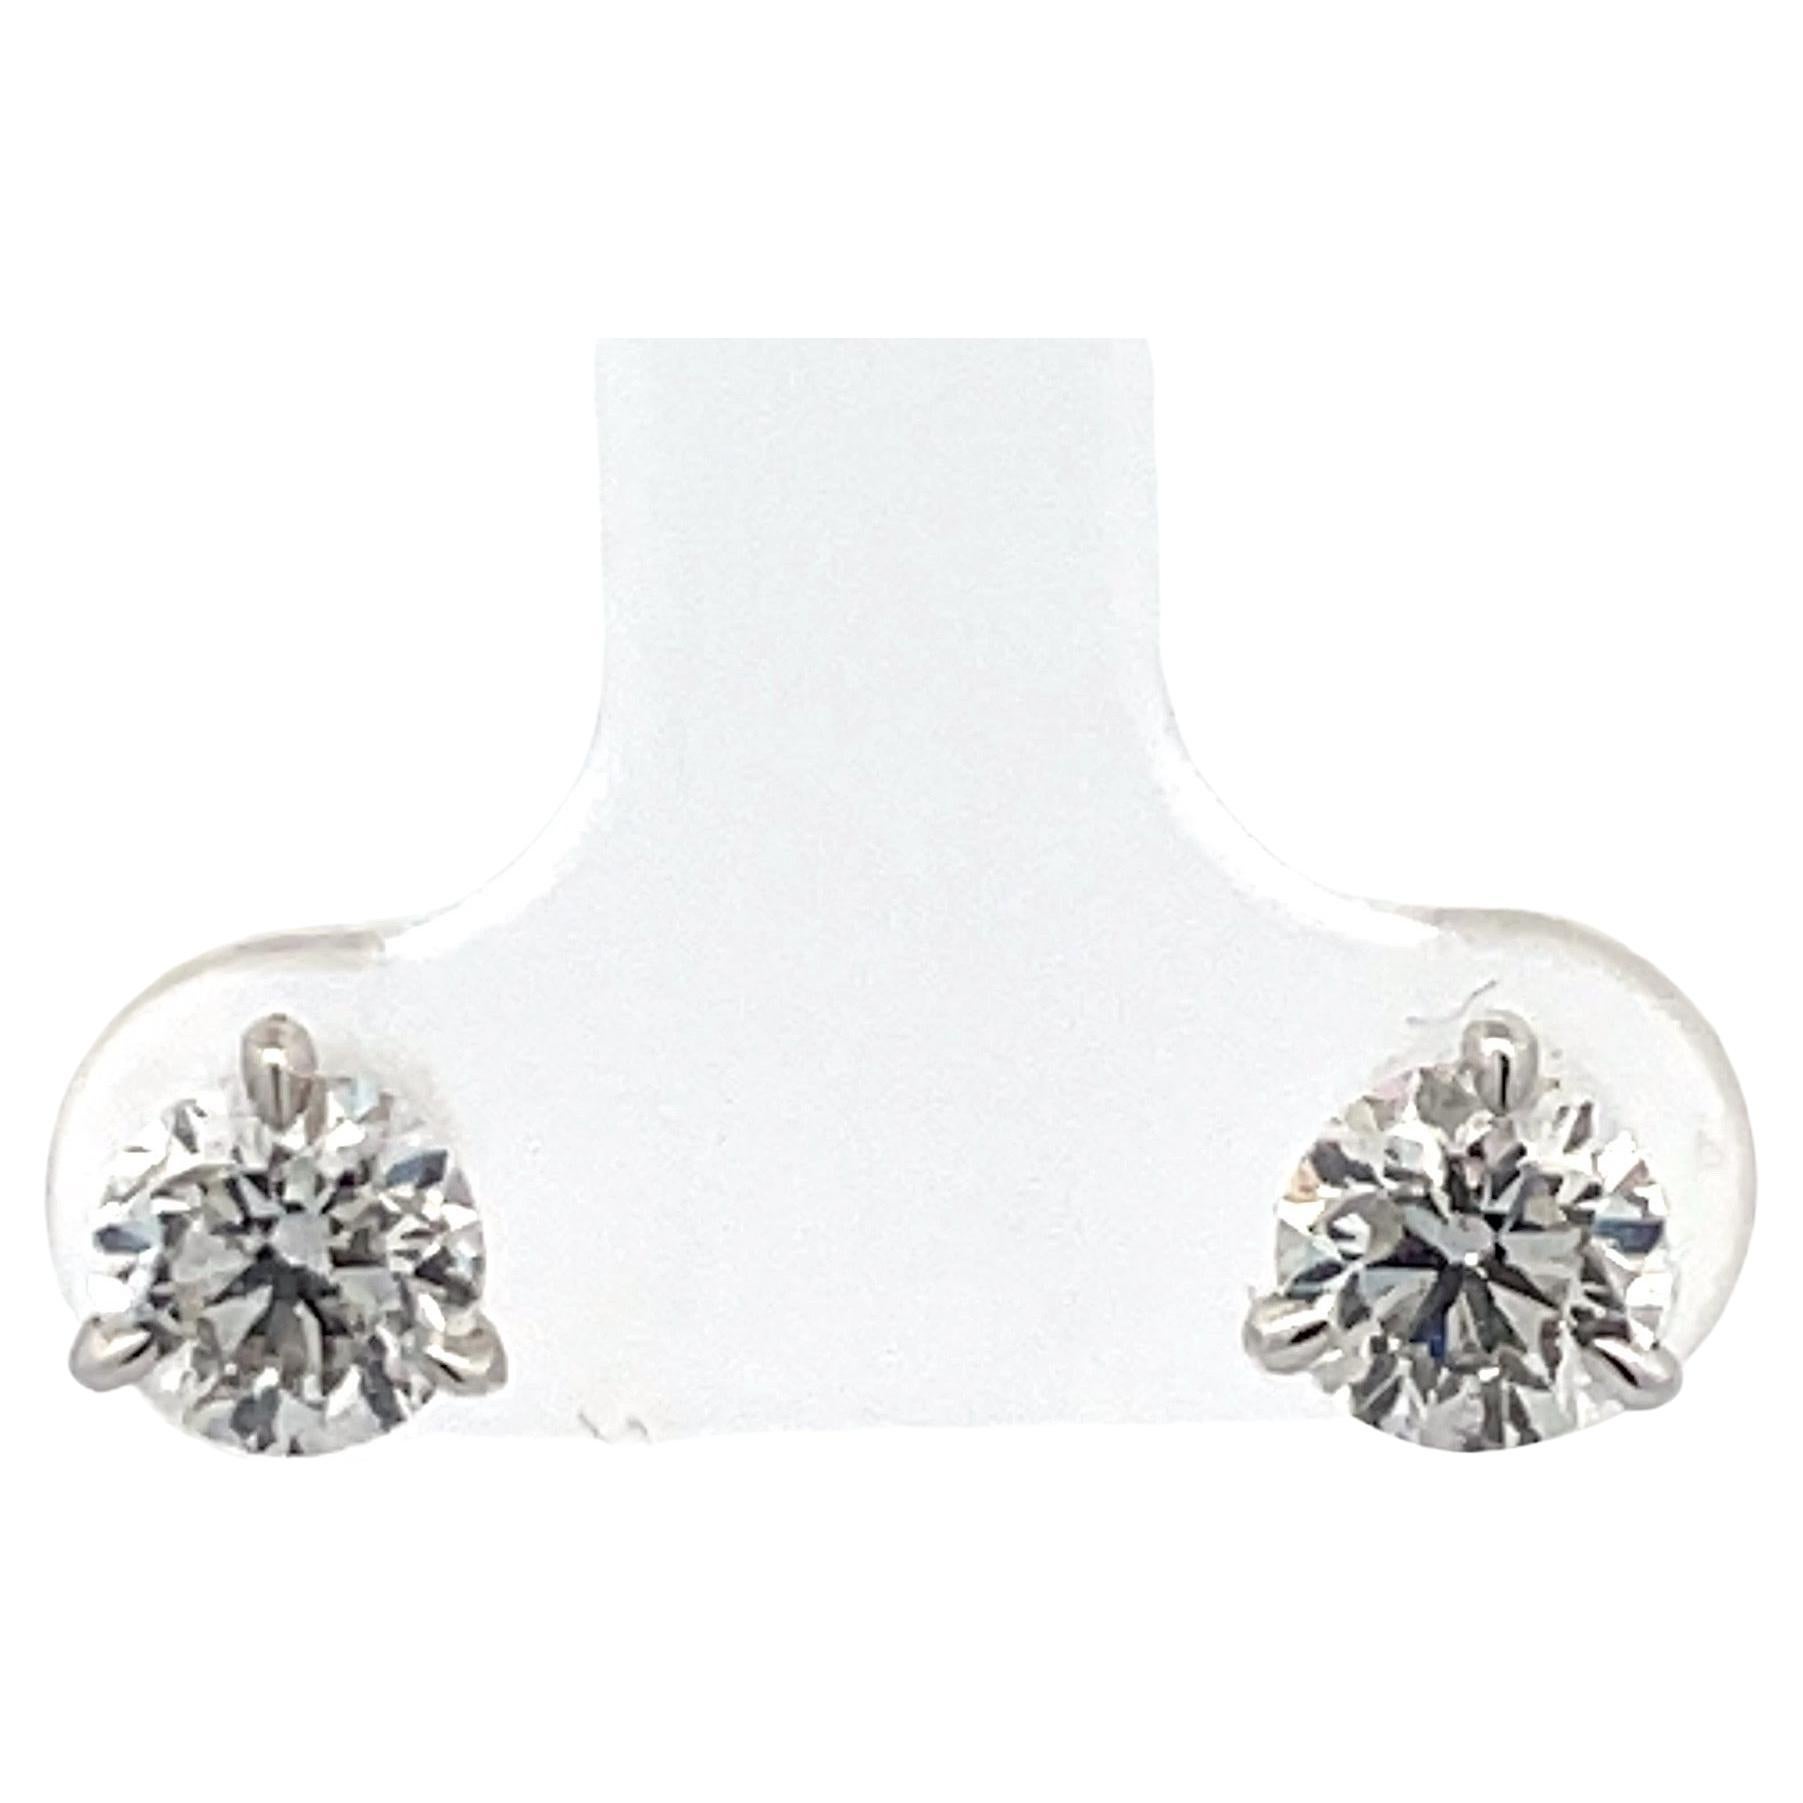 Diamond Stud Earrings 1.40 Carats I SI3-I1 18 Karat White Gold Champagne Setting